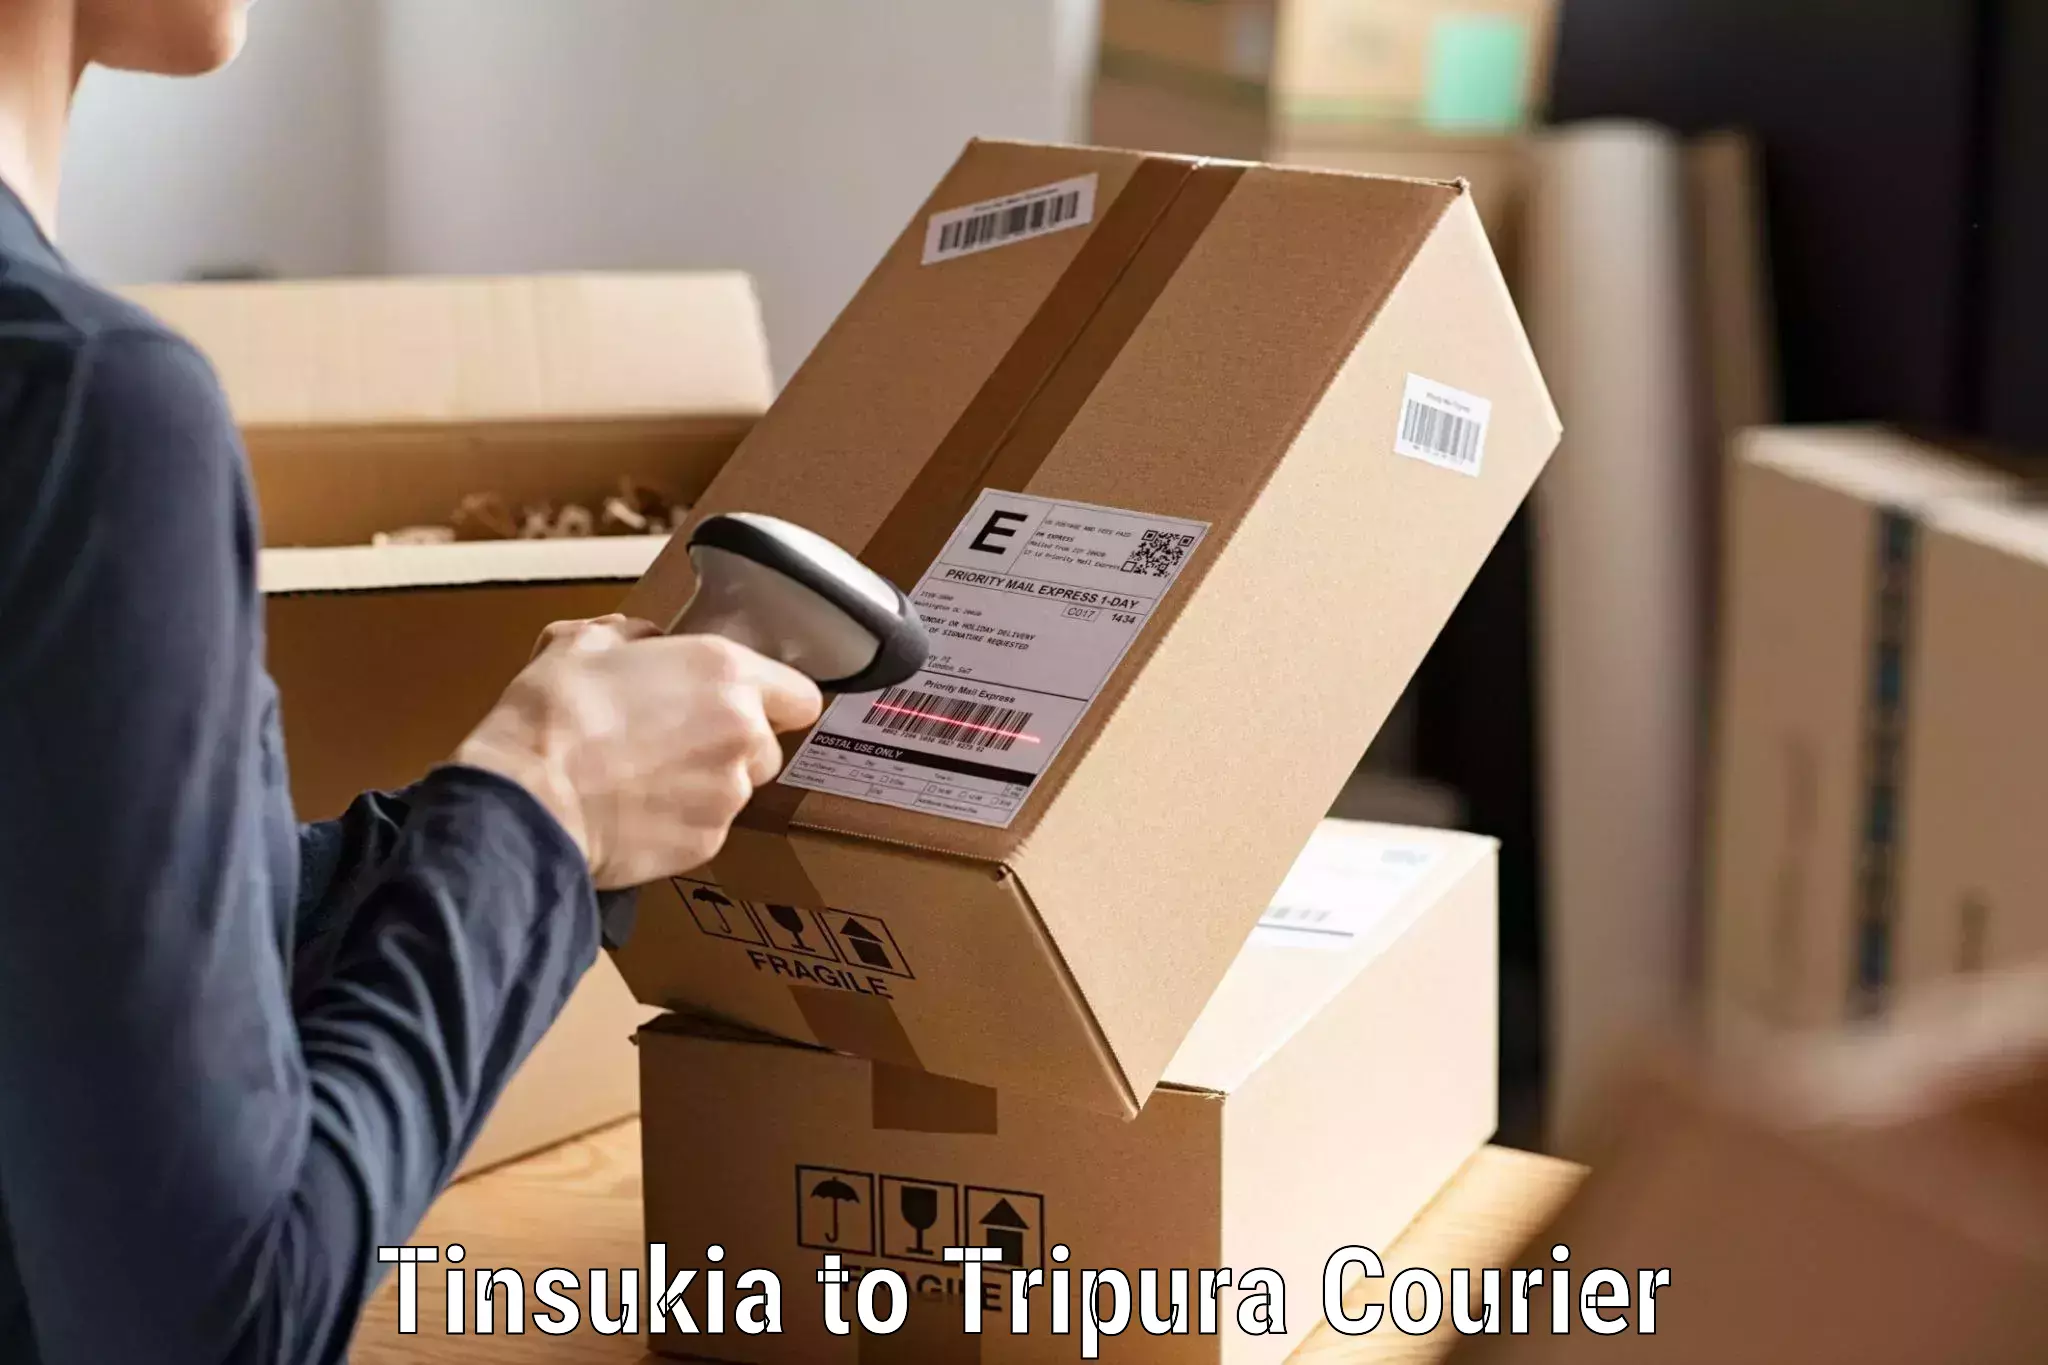 Courier service efficiency Tinsukia to Tripura